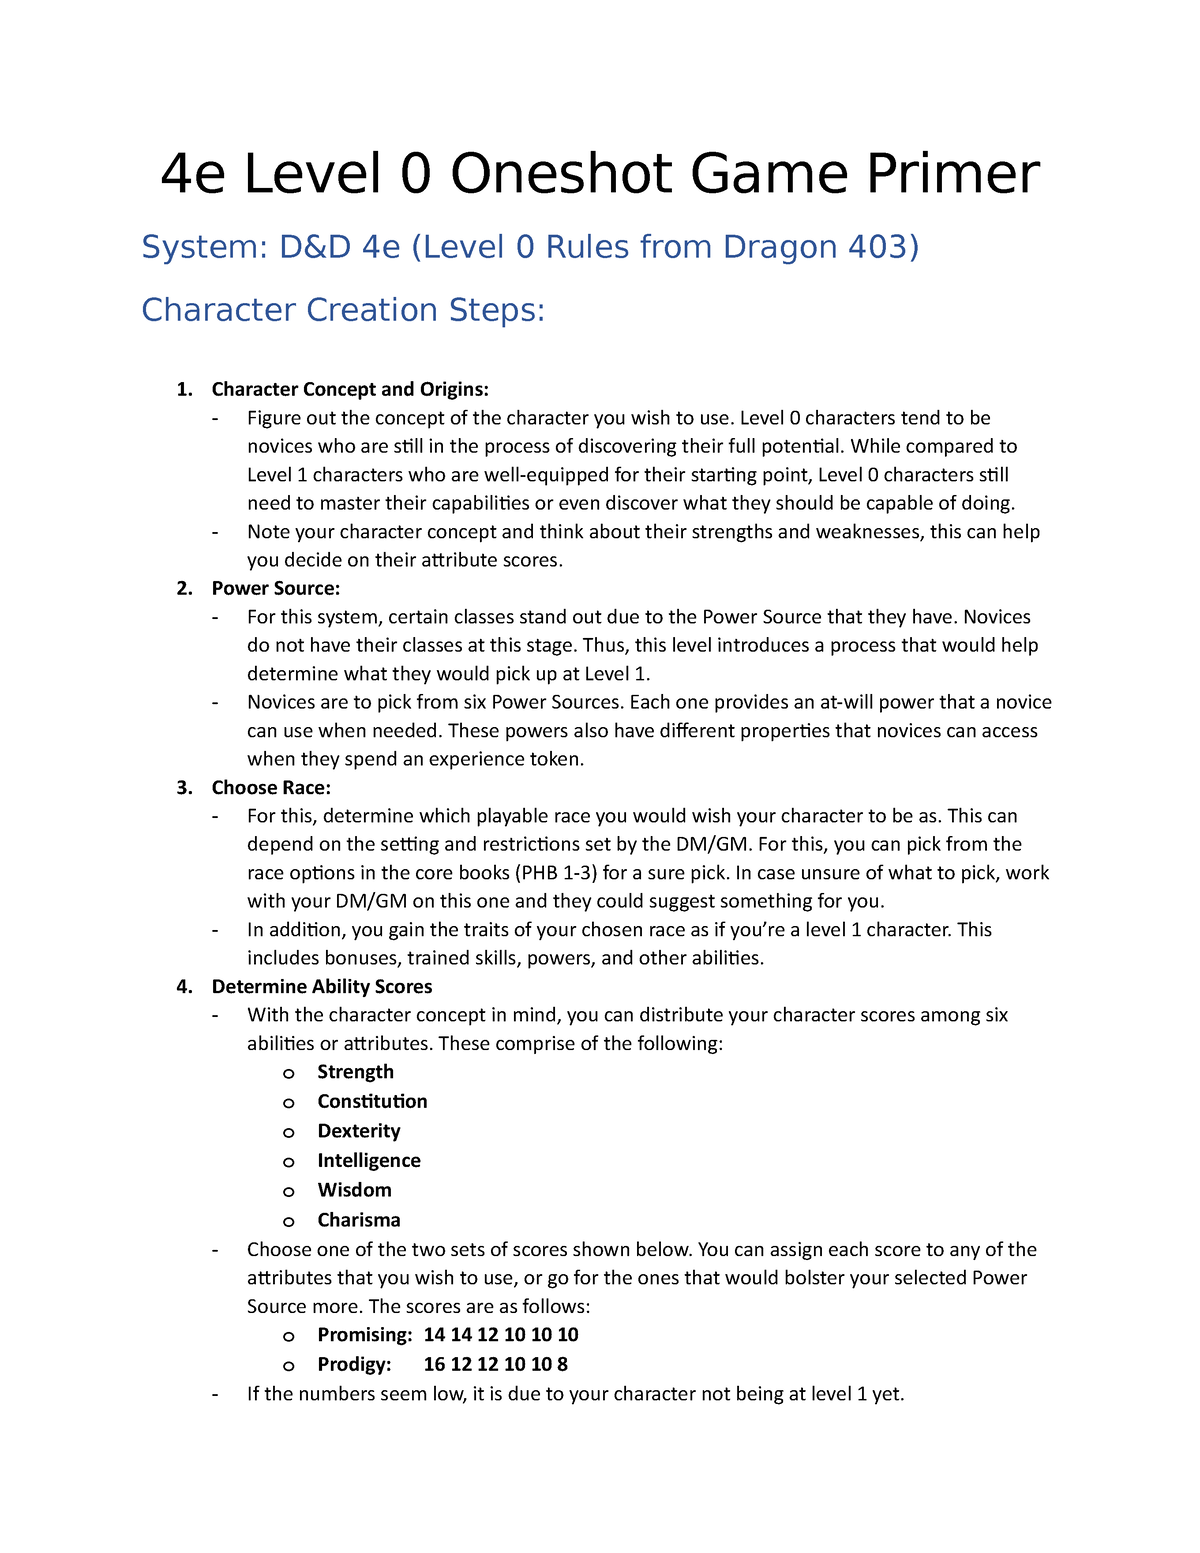 4e Level 0 Oneshot Game Primer 4e Level 0 Oneshot Game Primer System